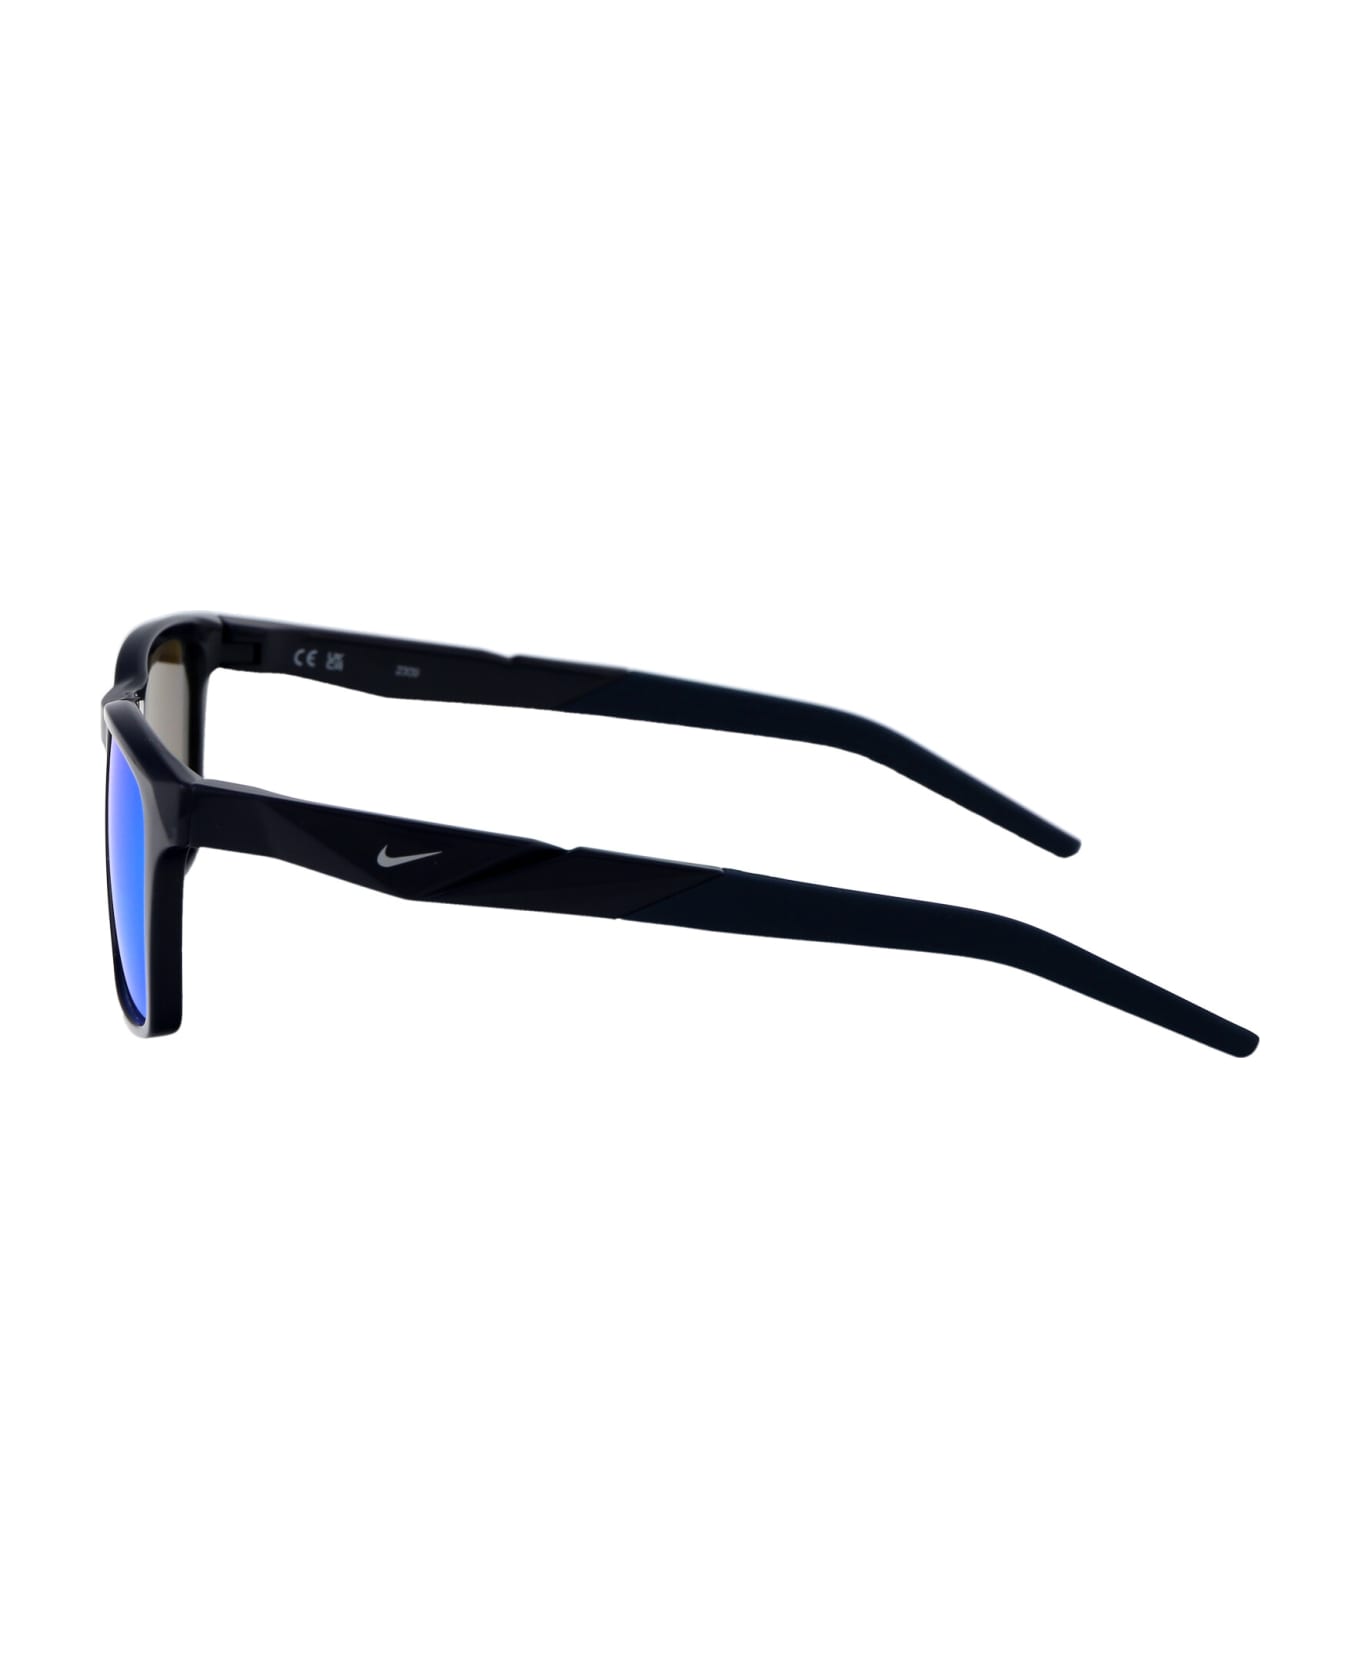 Nike Radeon 1 M Sunglasses - 410 BLUE MIRROR NAVY